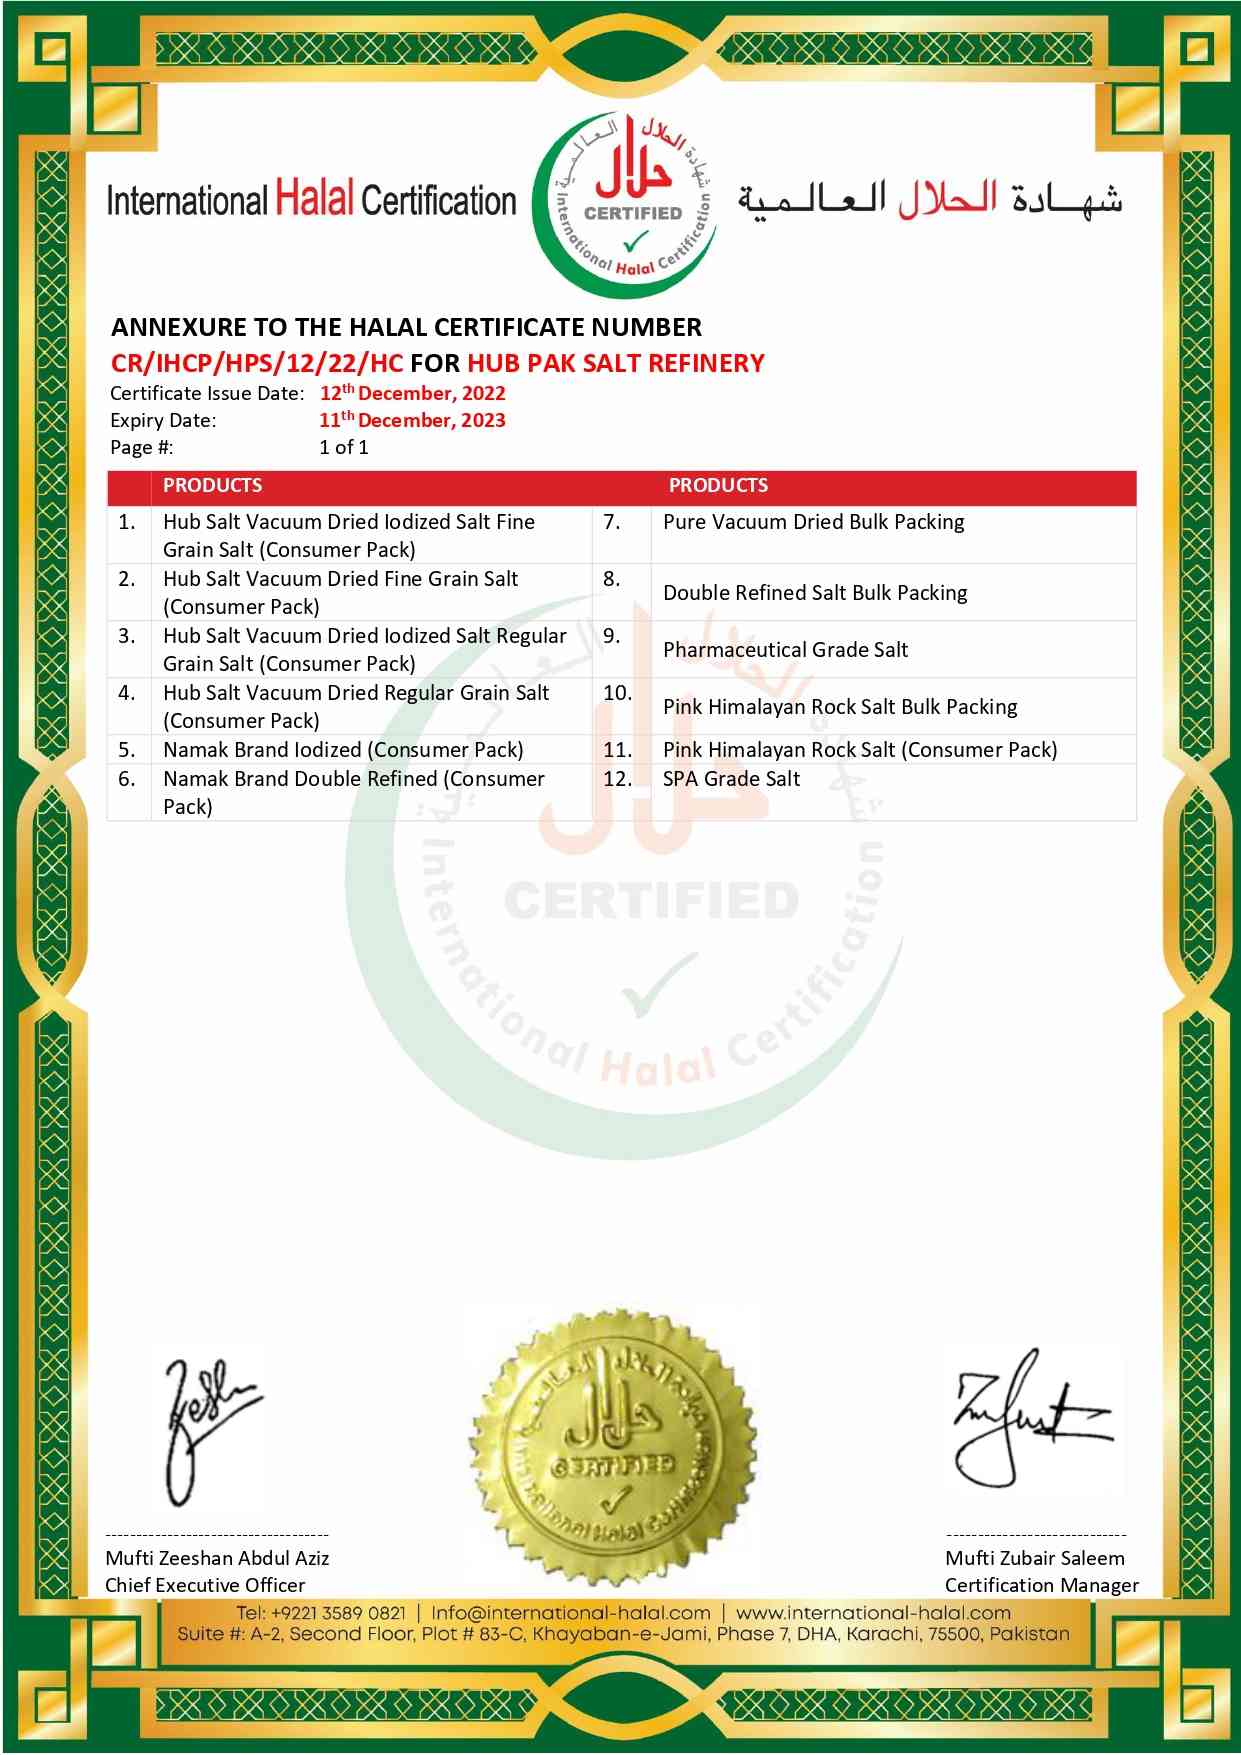 IHC Halal Certificate Annexure -HUB PAK SALT REFINERY-2022-2023